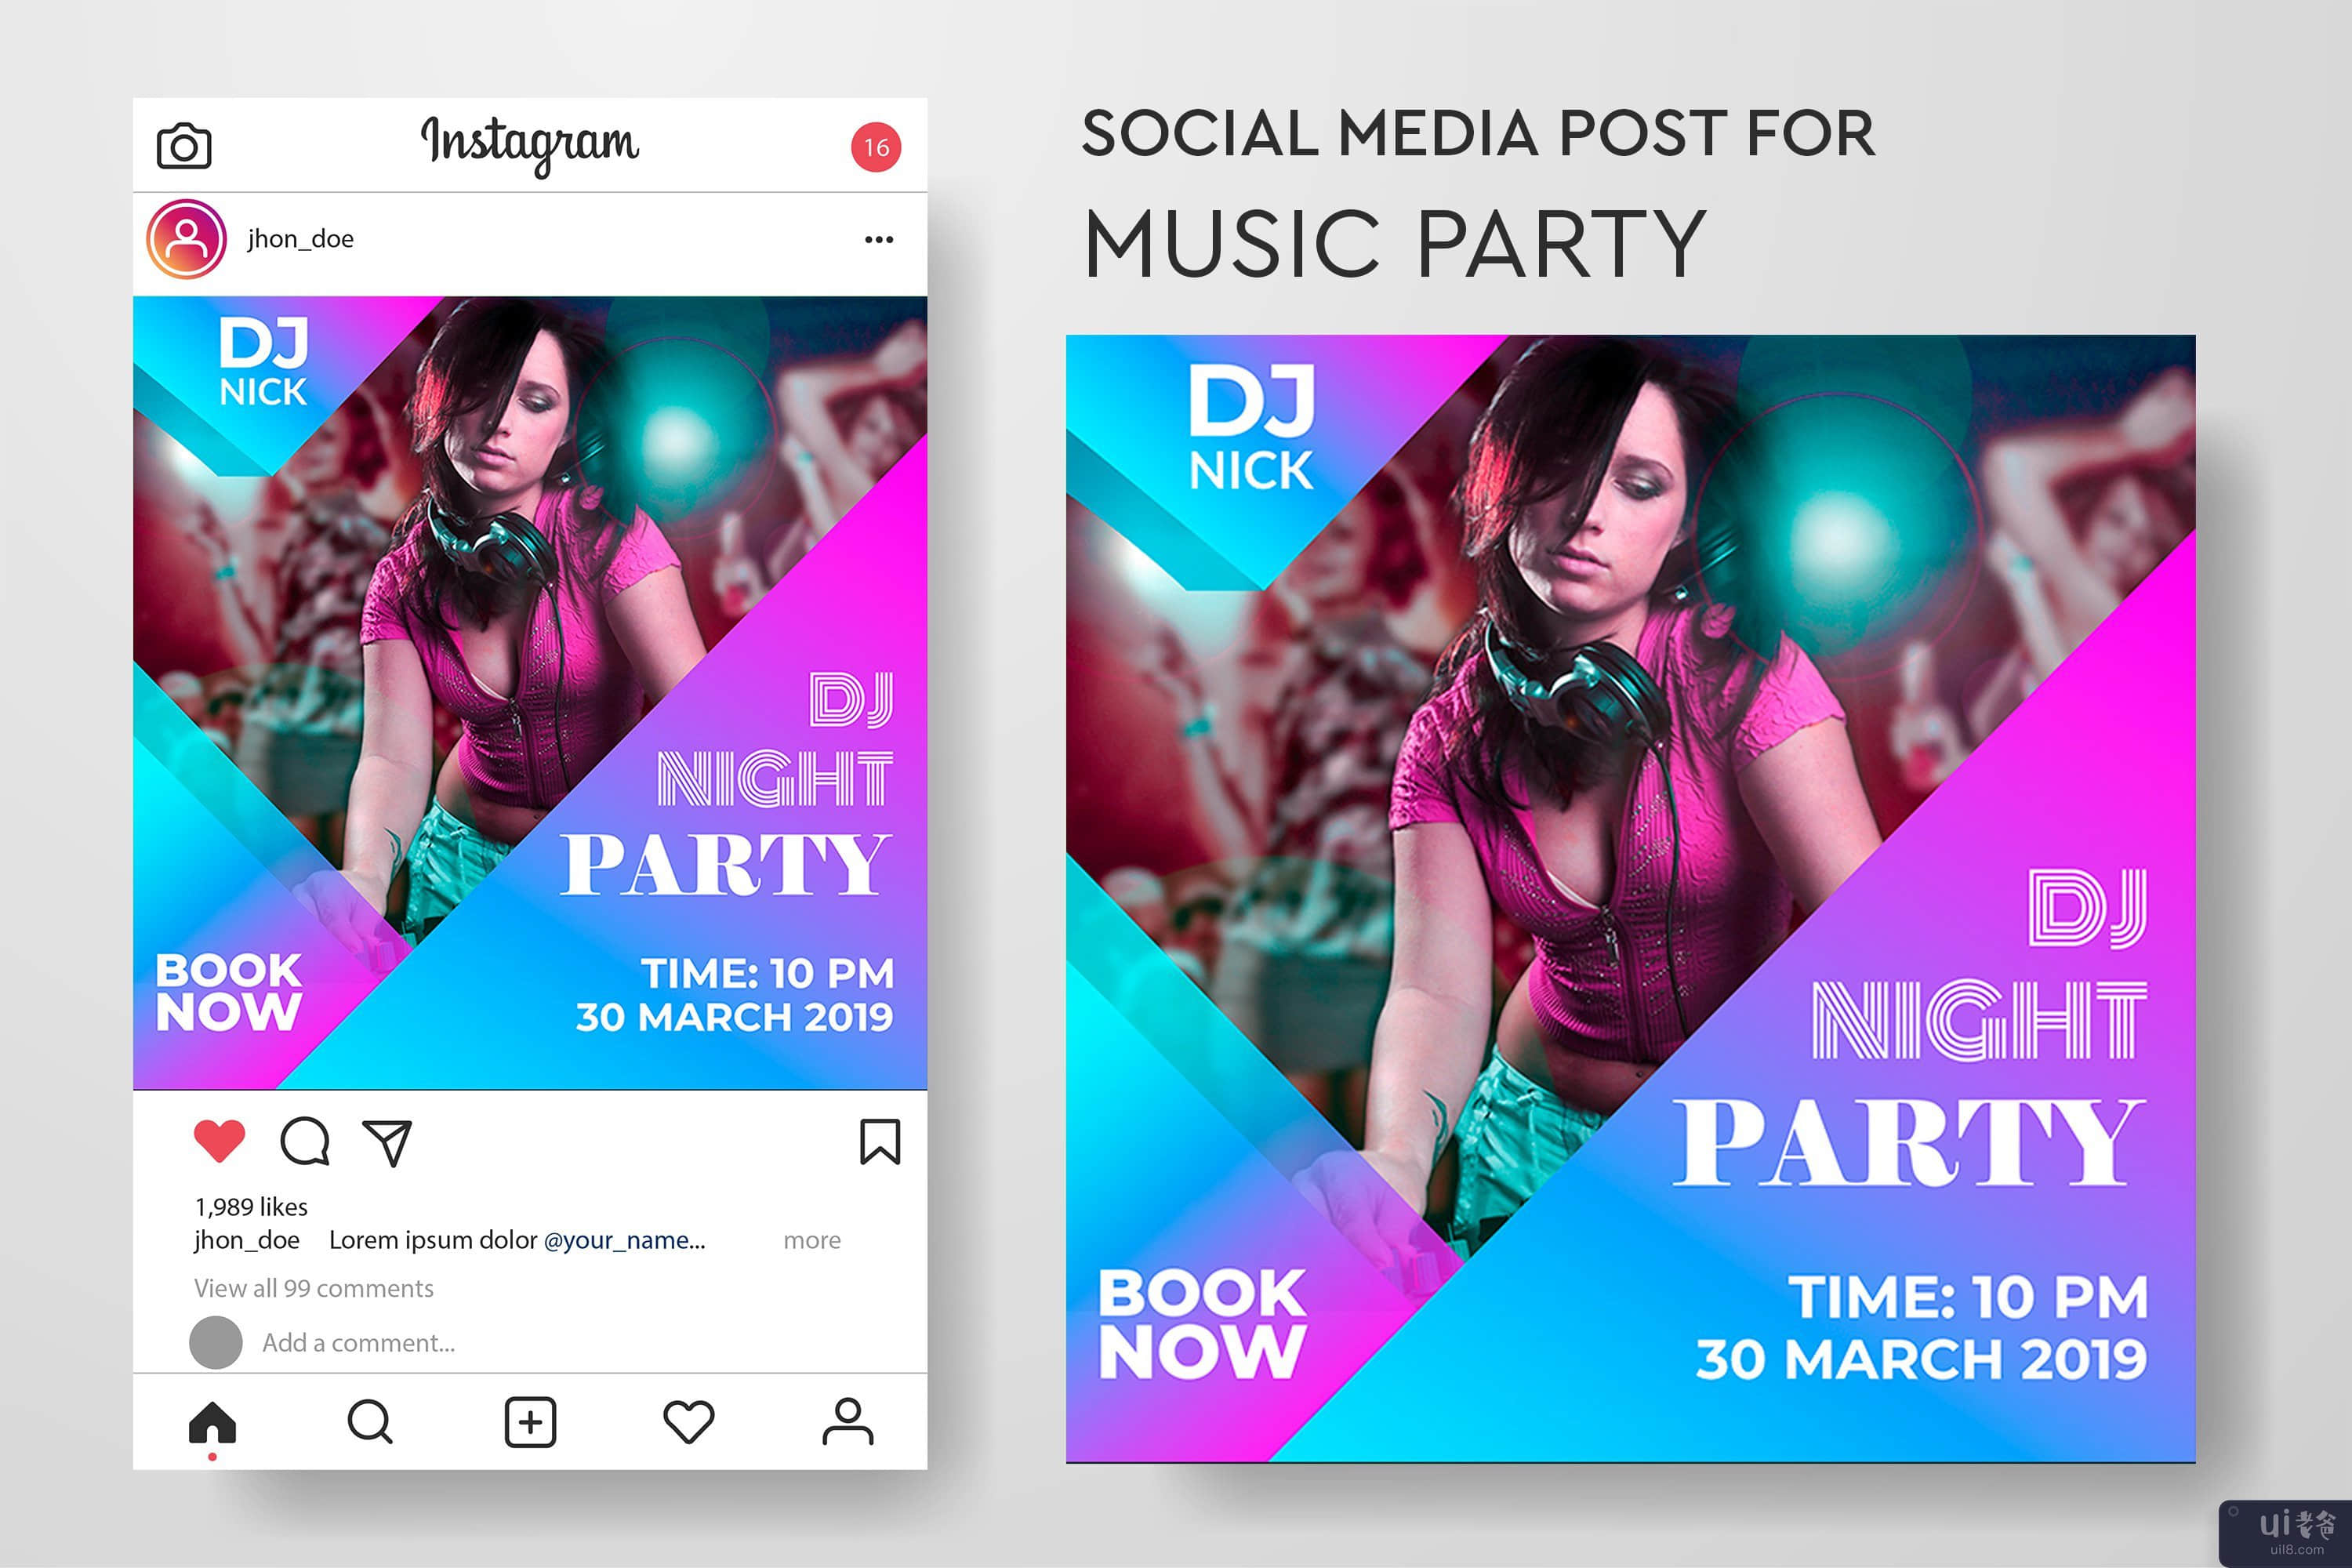 音乐派对社交媒体帖子合集(Music party social media post collection)插图